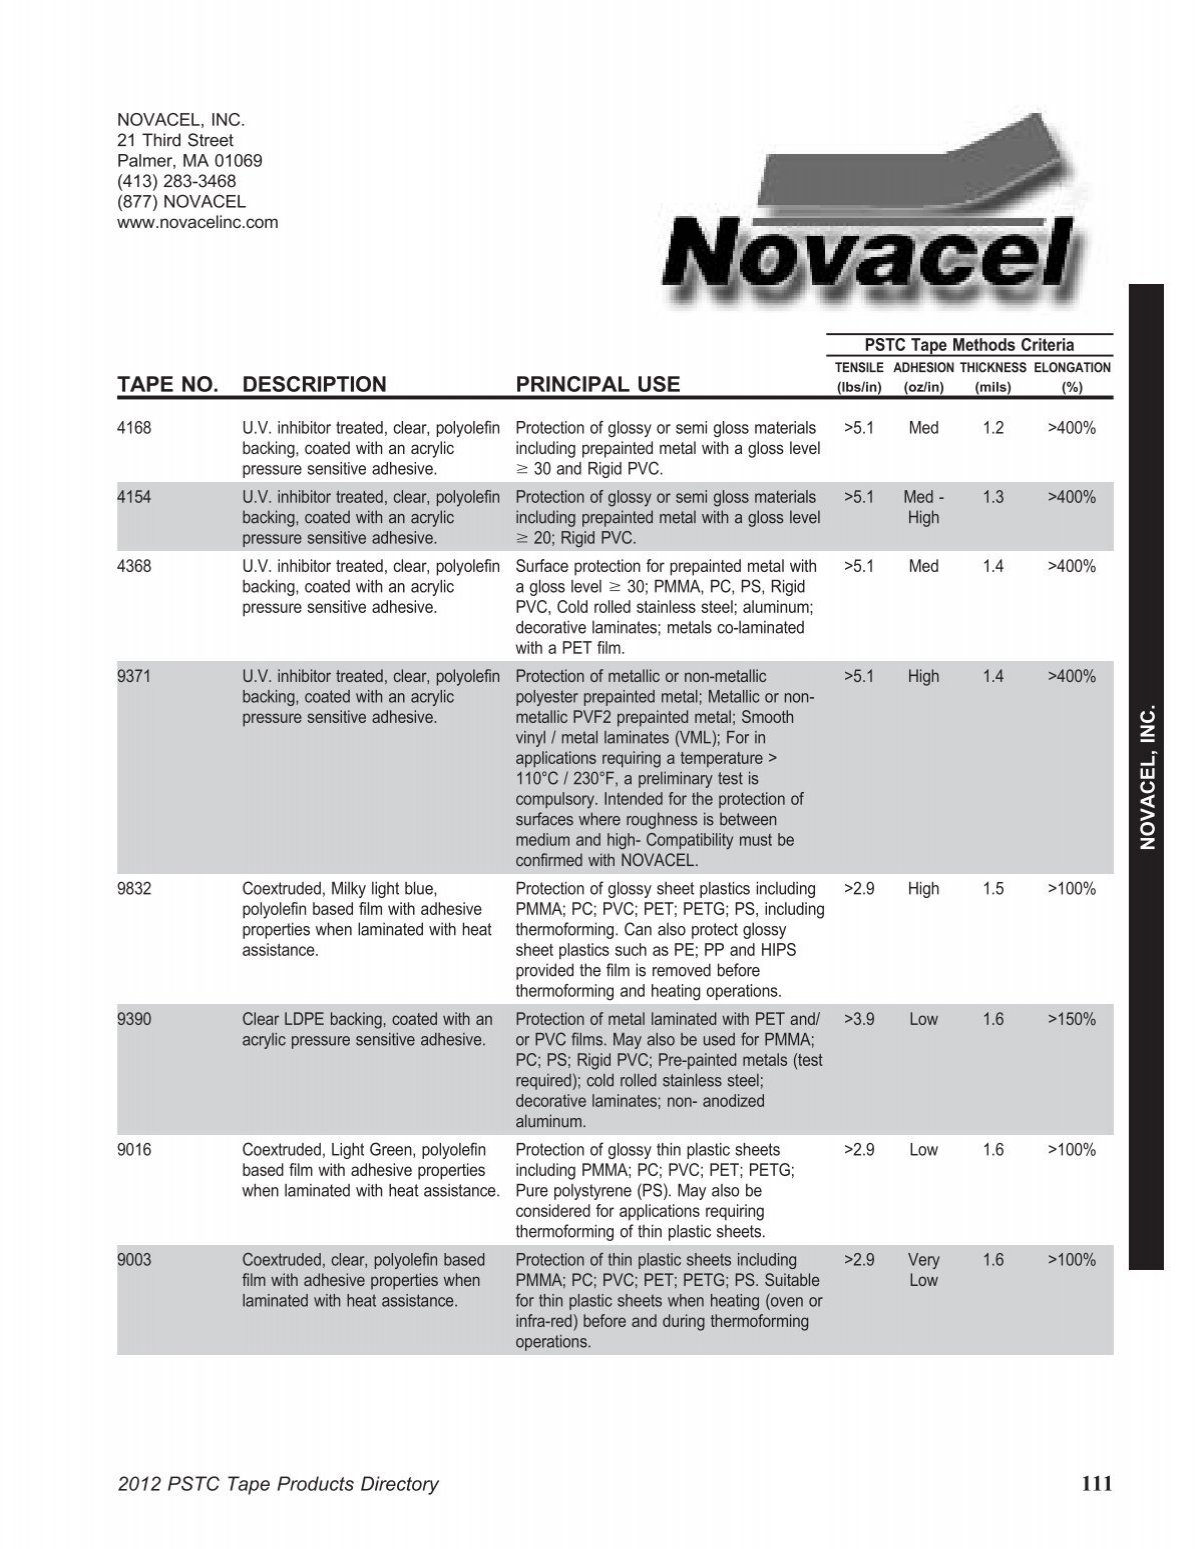 Novacel BN 6490 Technical tapes by Novacel